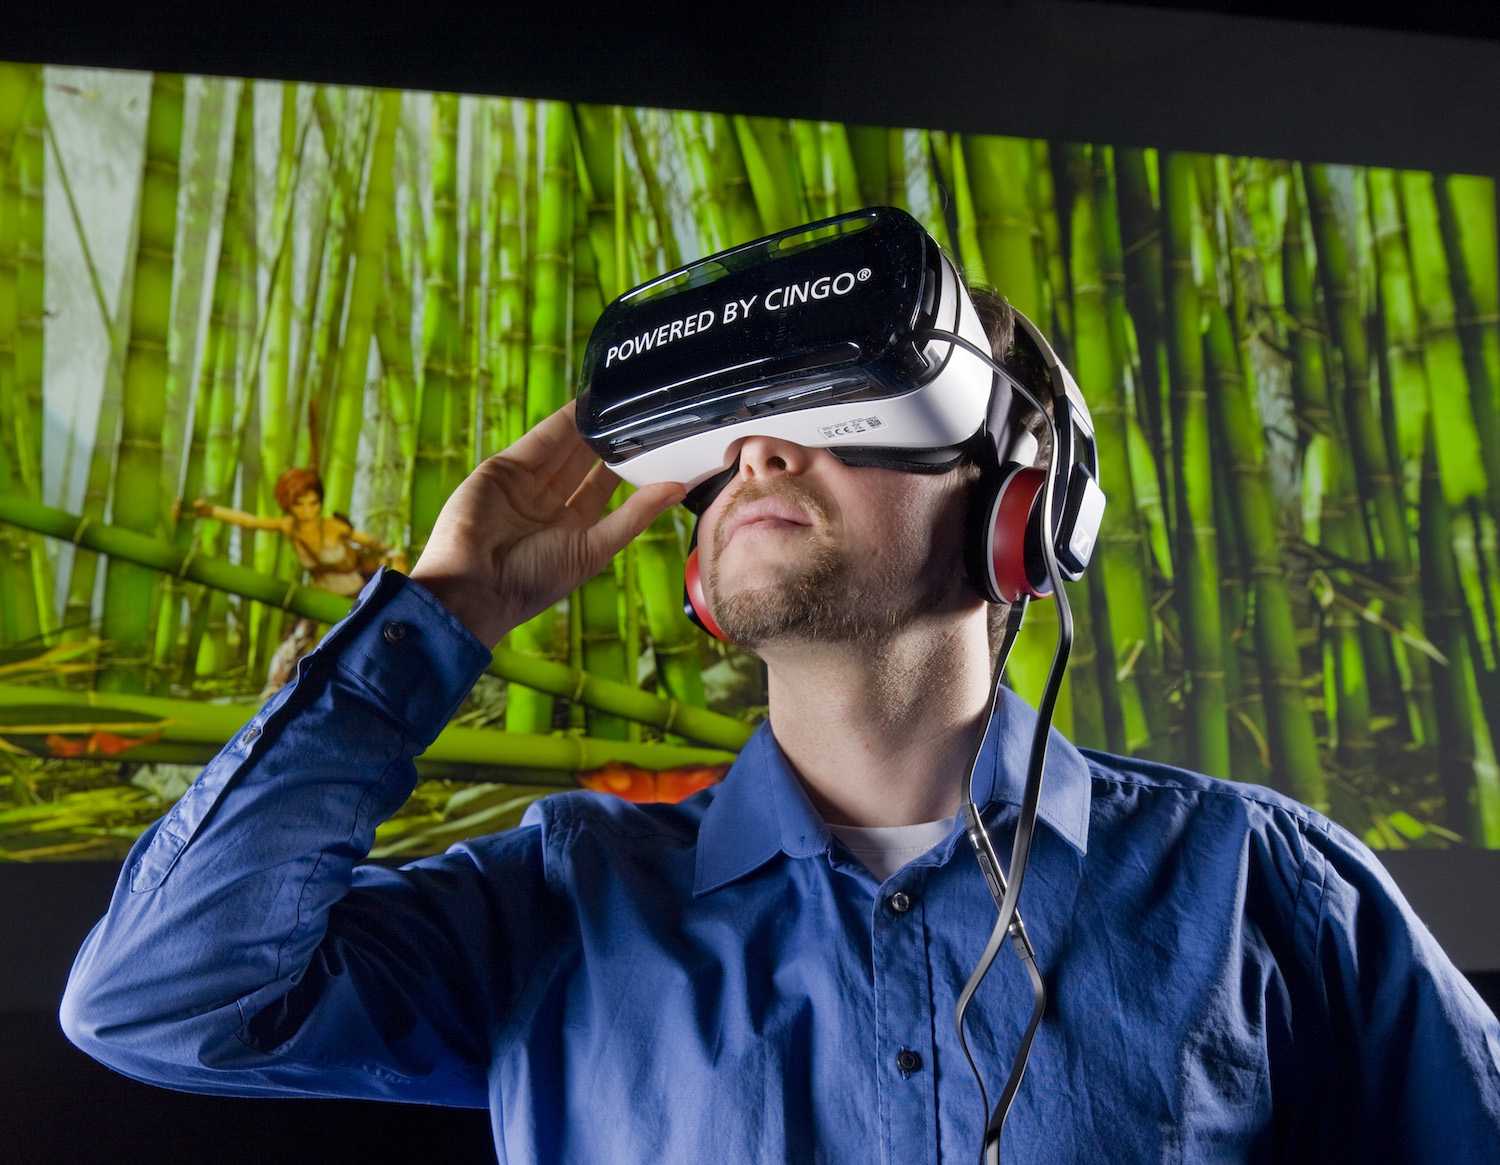 Vr vision pro. VR виртуальная реальность. Виртуальная реальность без погружения. Человек в виртуальной реальности. Очки виртуальной реальности на человеке.